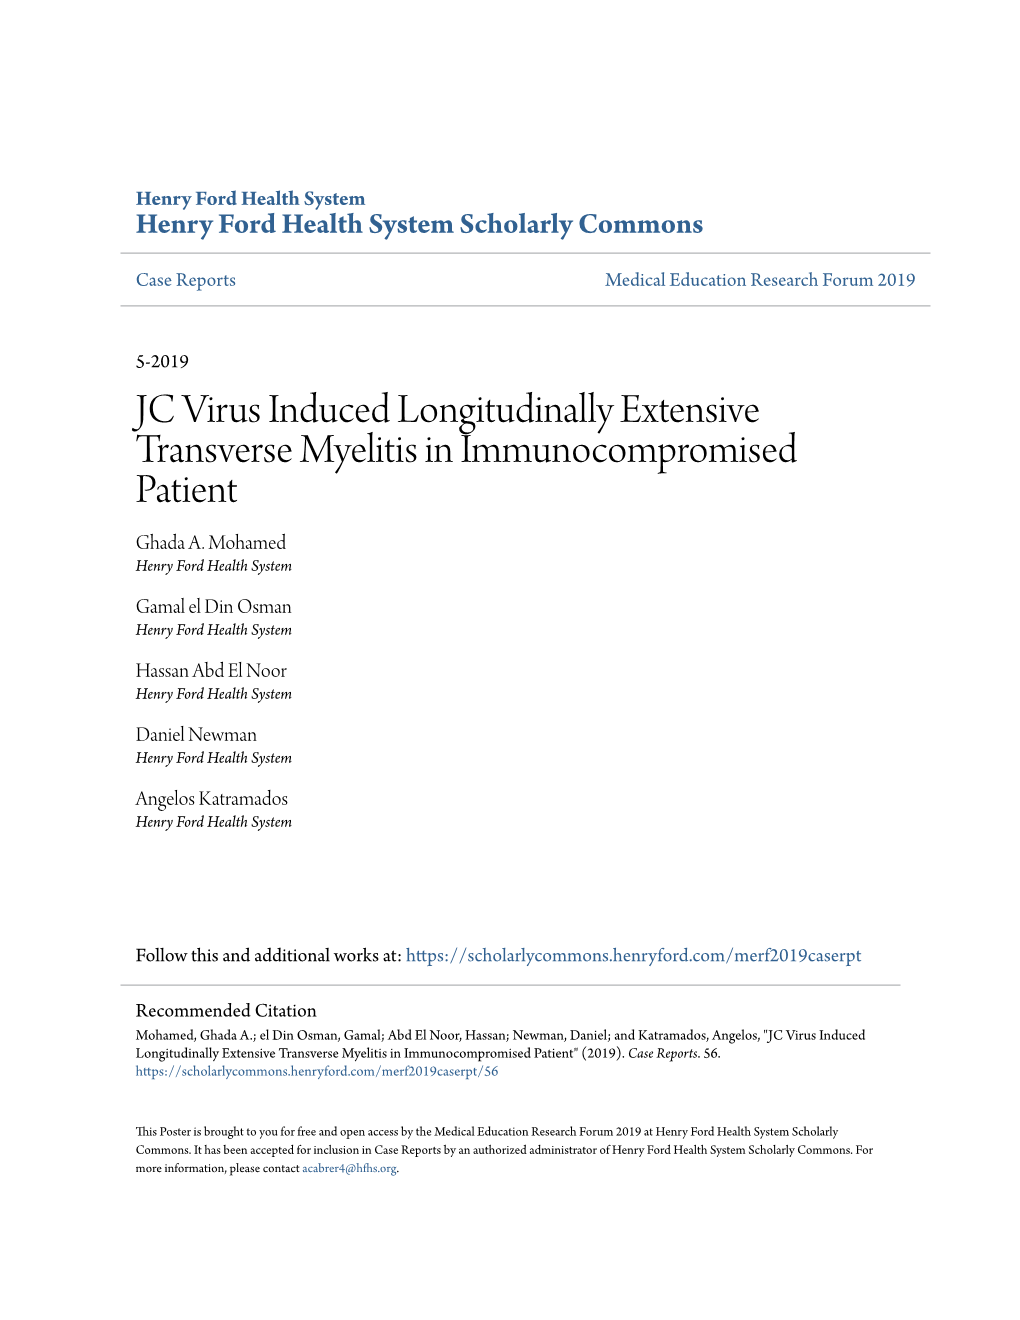 JC Virus Induced Longitudinally Extensive Transverse Myelitis in Immunocompromised Patient Ghada A